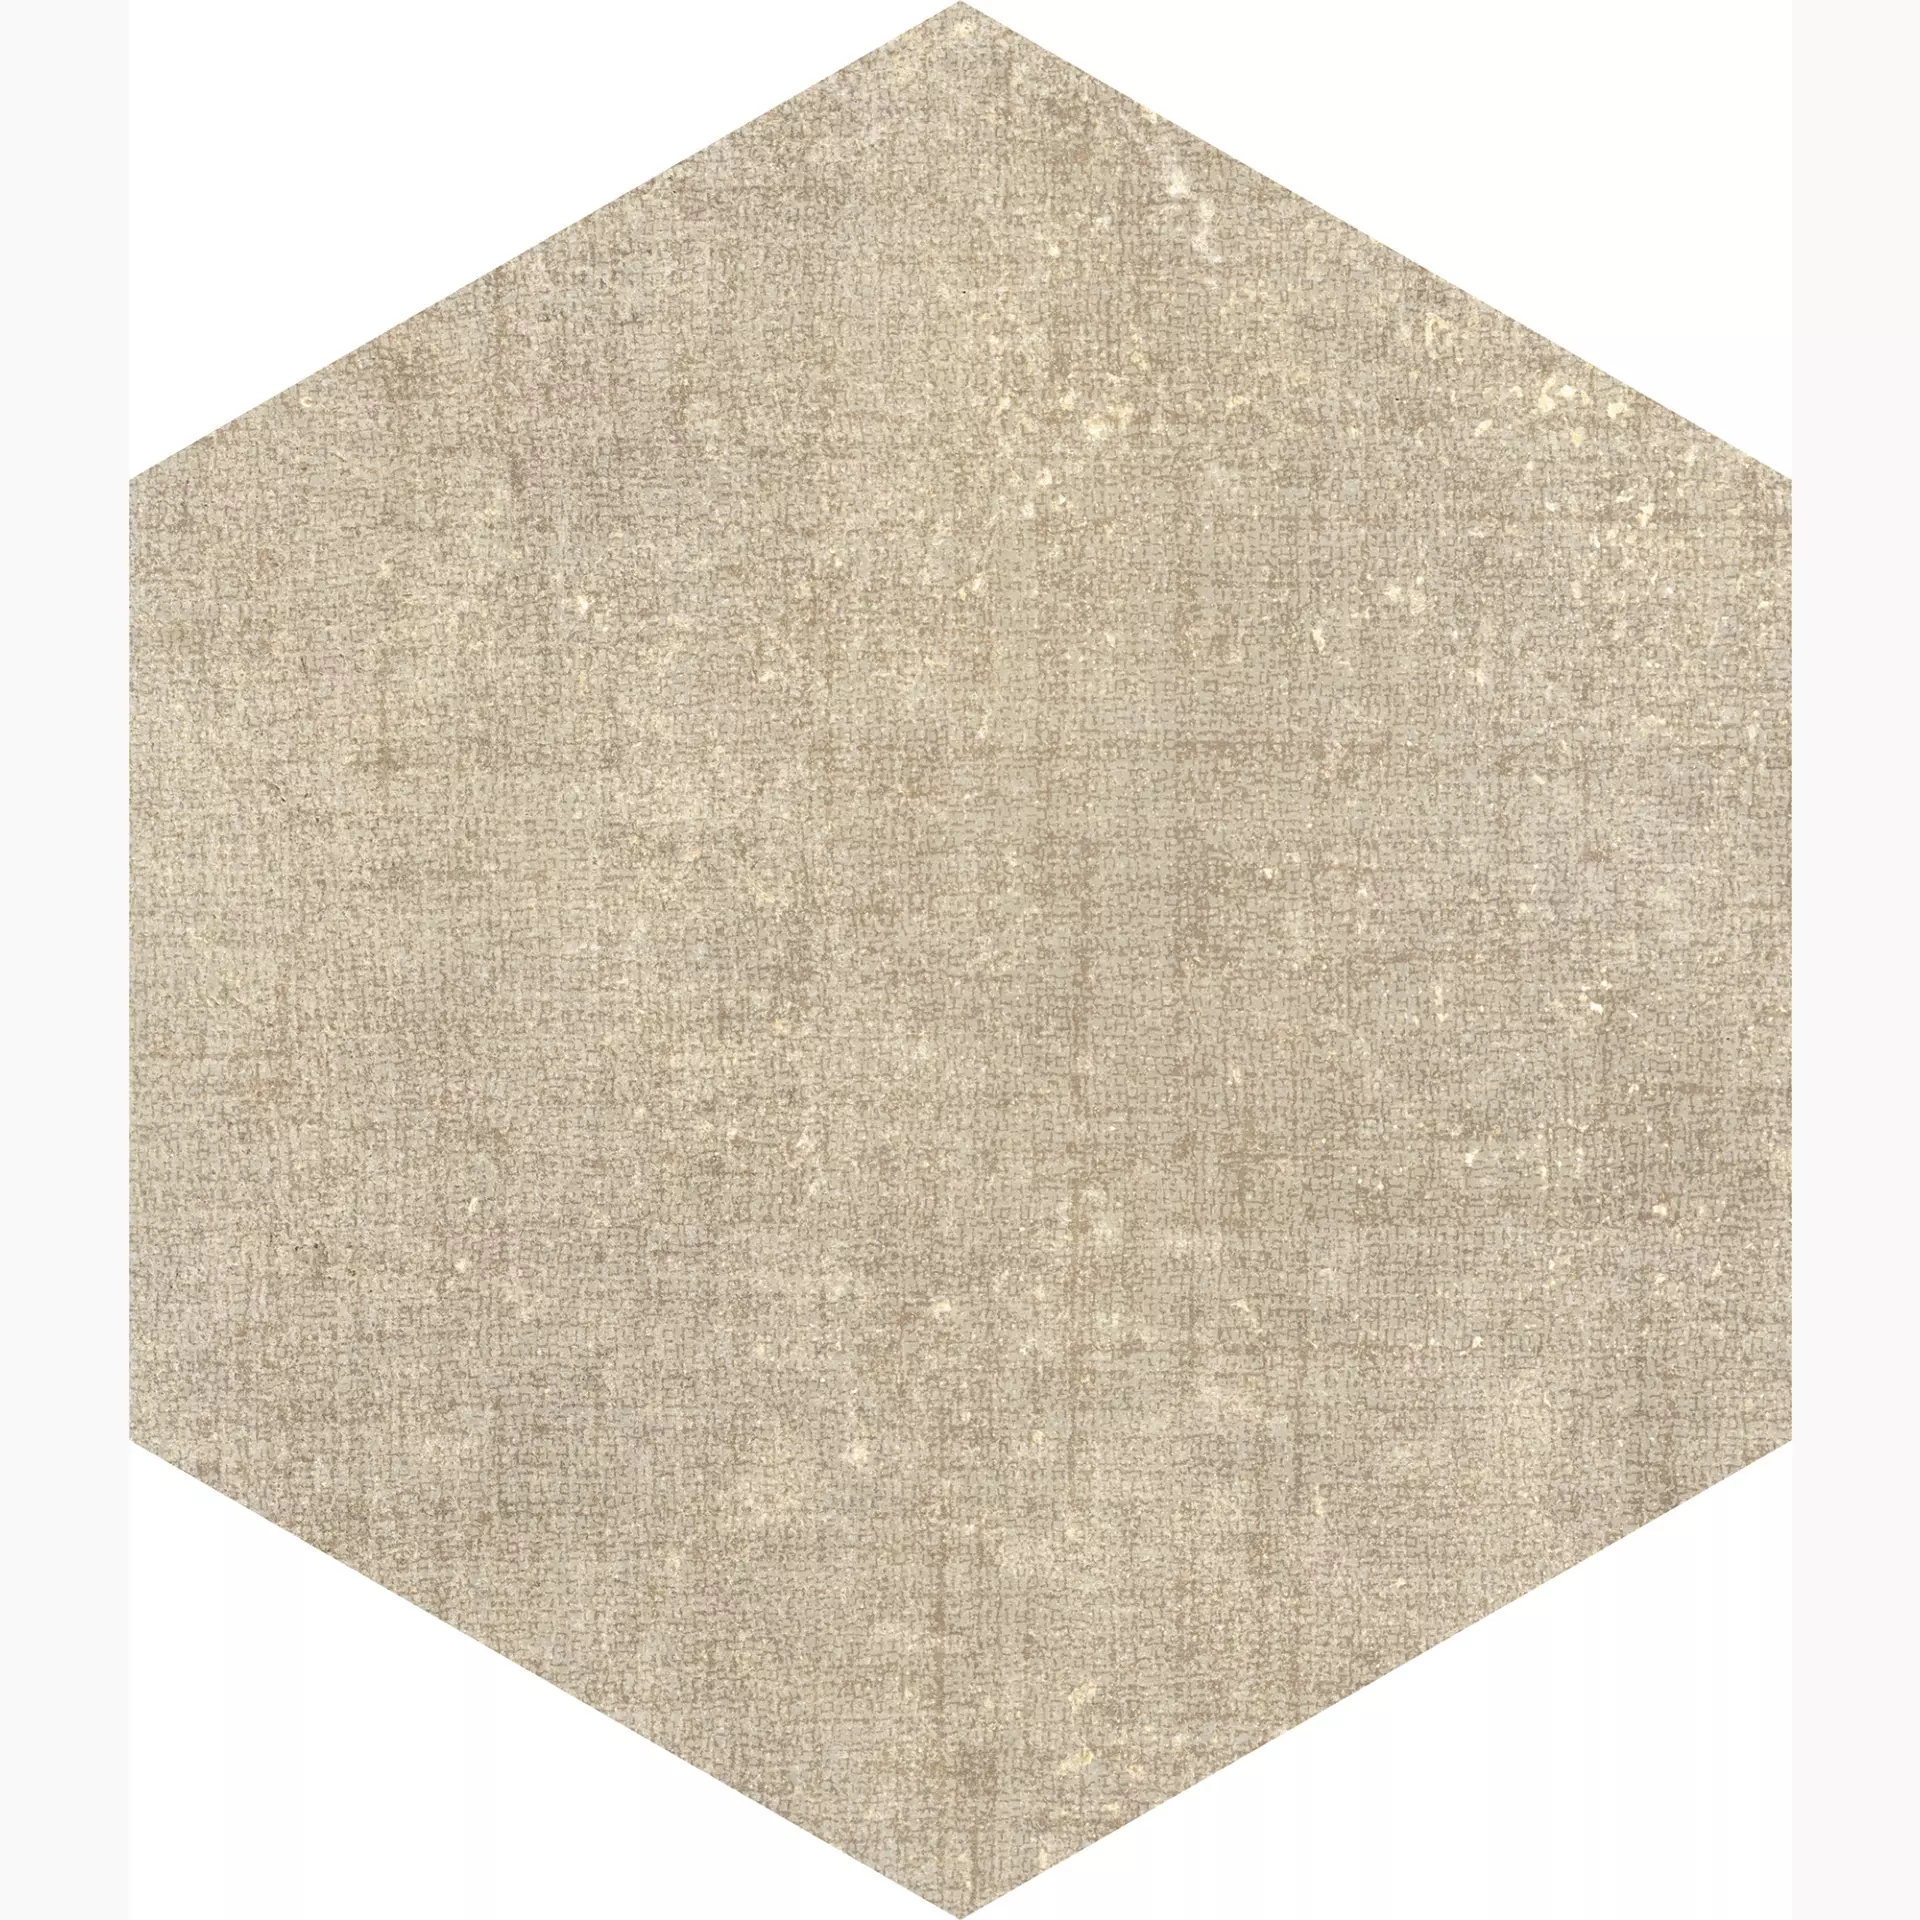 Marcacorona Textile Sand Naturale – Matt Sand D569 matt natur 21,6x25cm Esagona 9mm